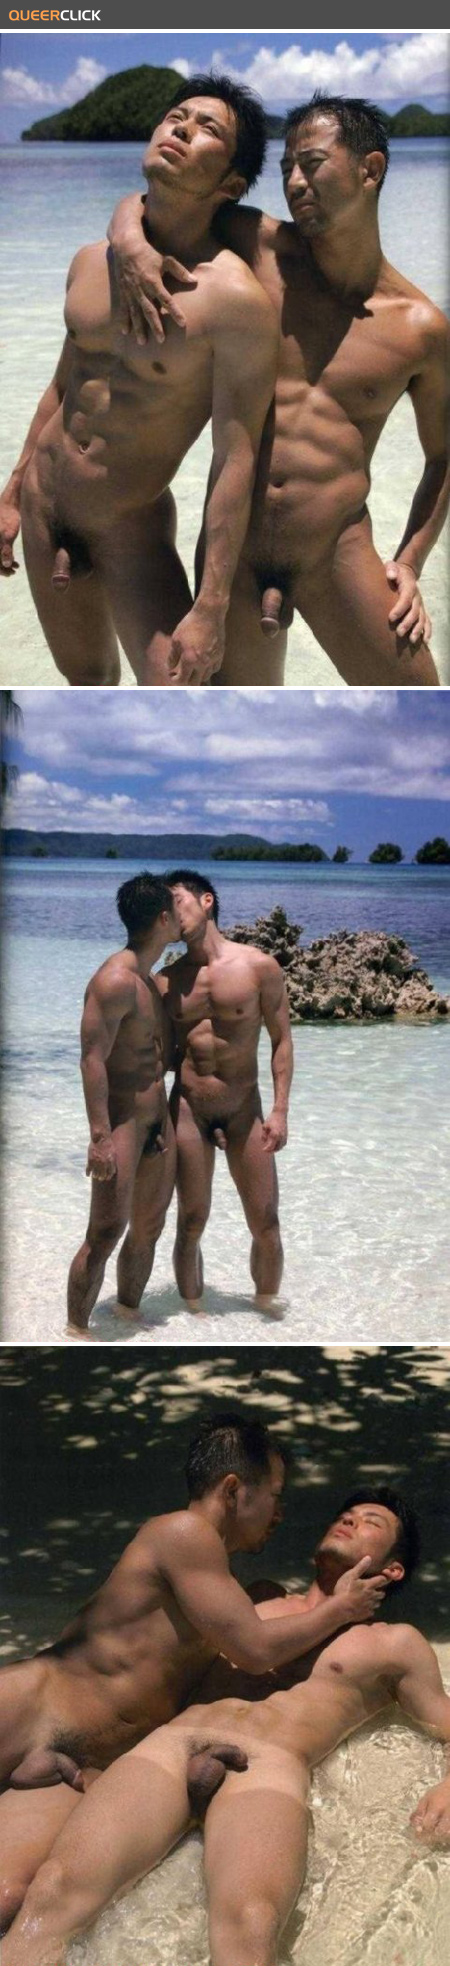 gay_couple_yas_hide_001.jpg